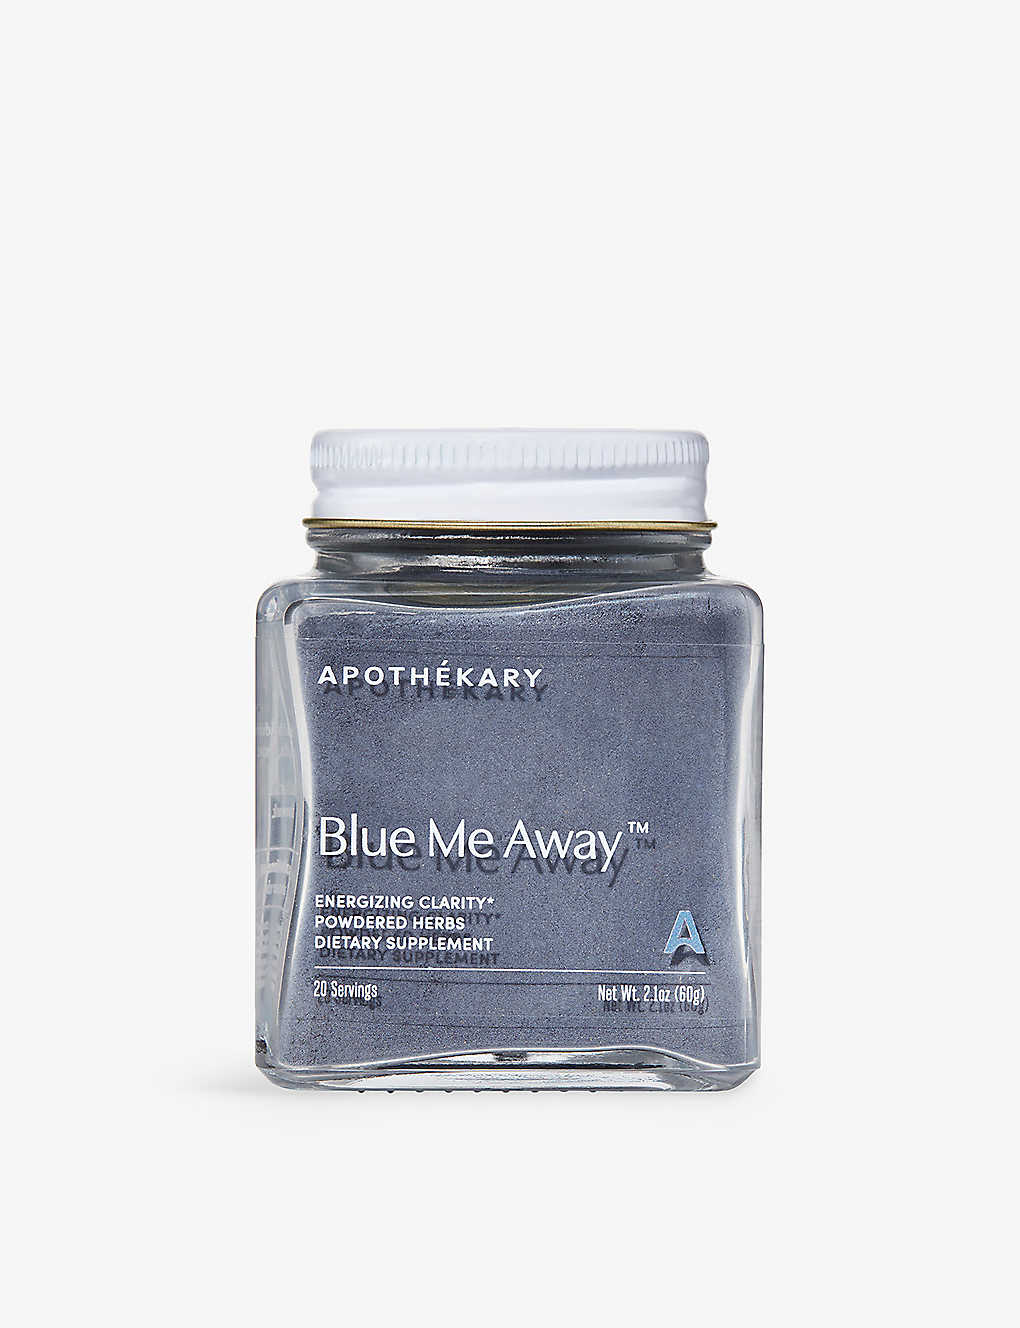 Apothekary Blue Me Away Herbal Supplement 60g